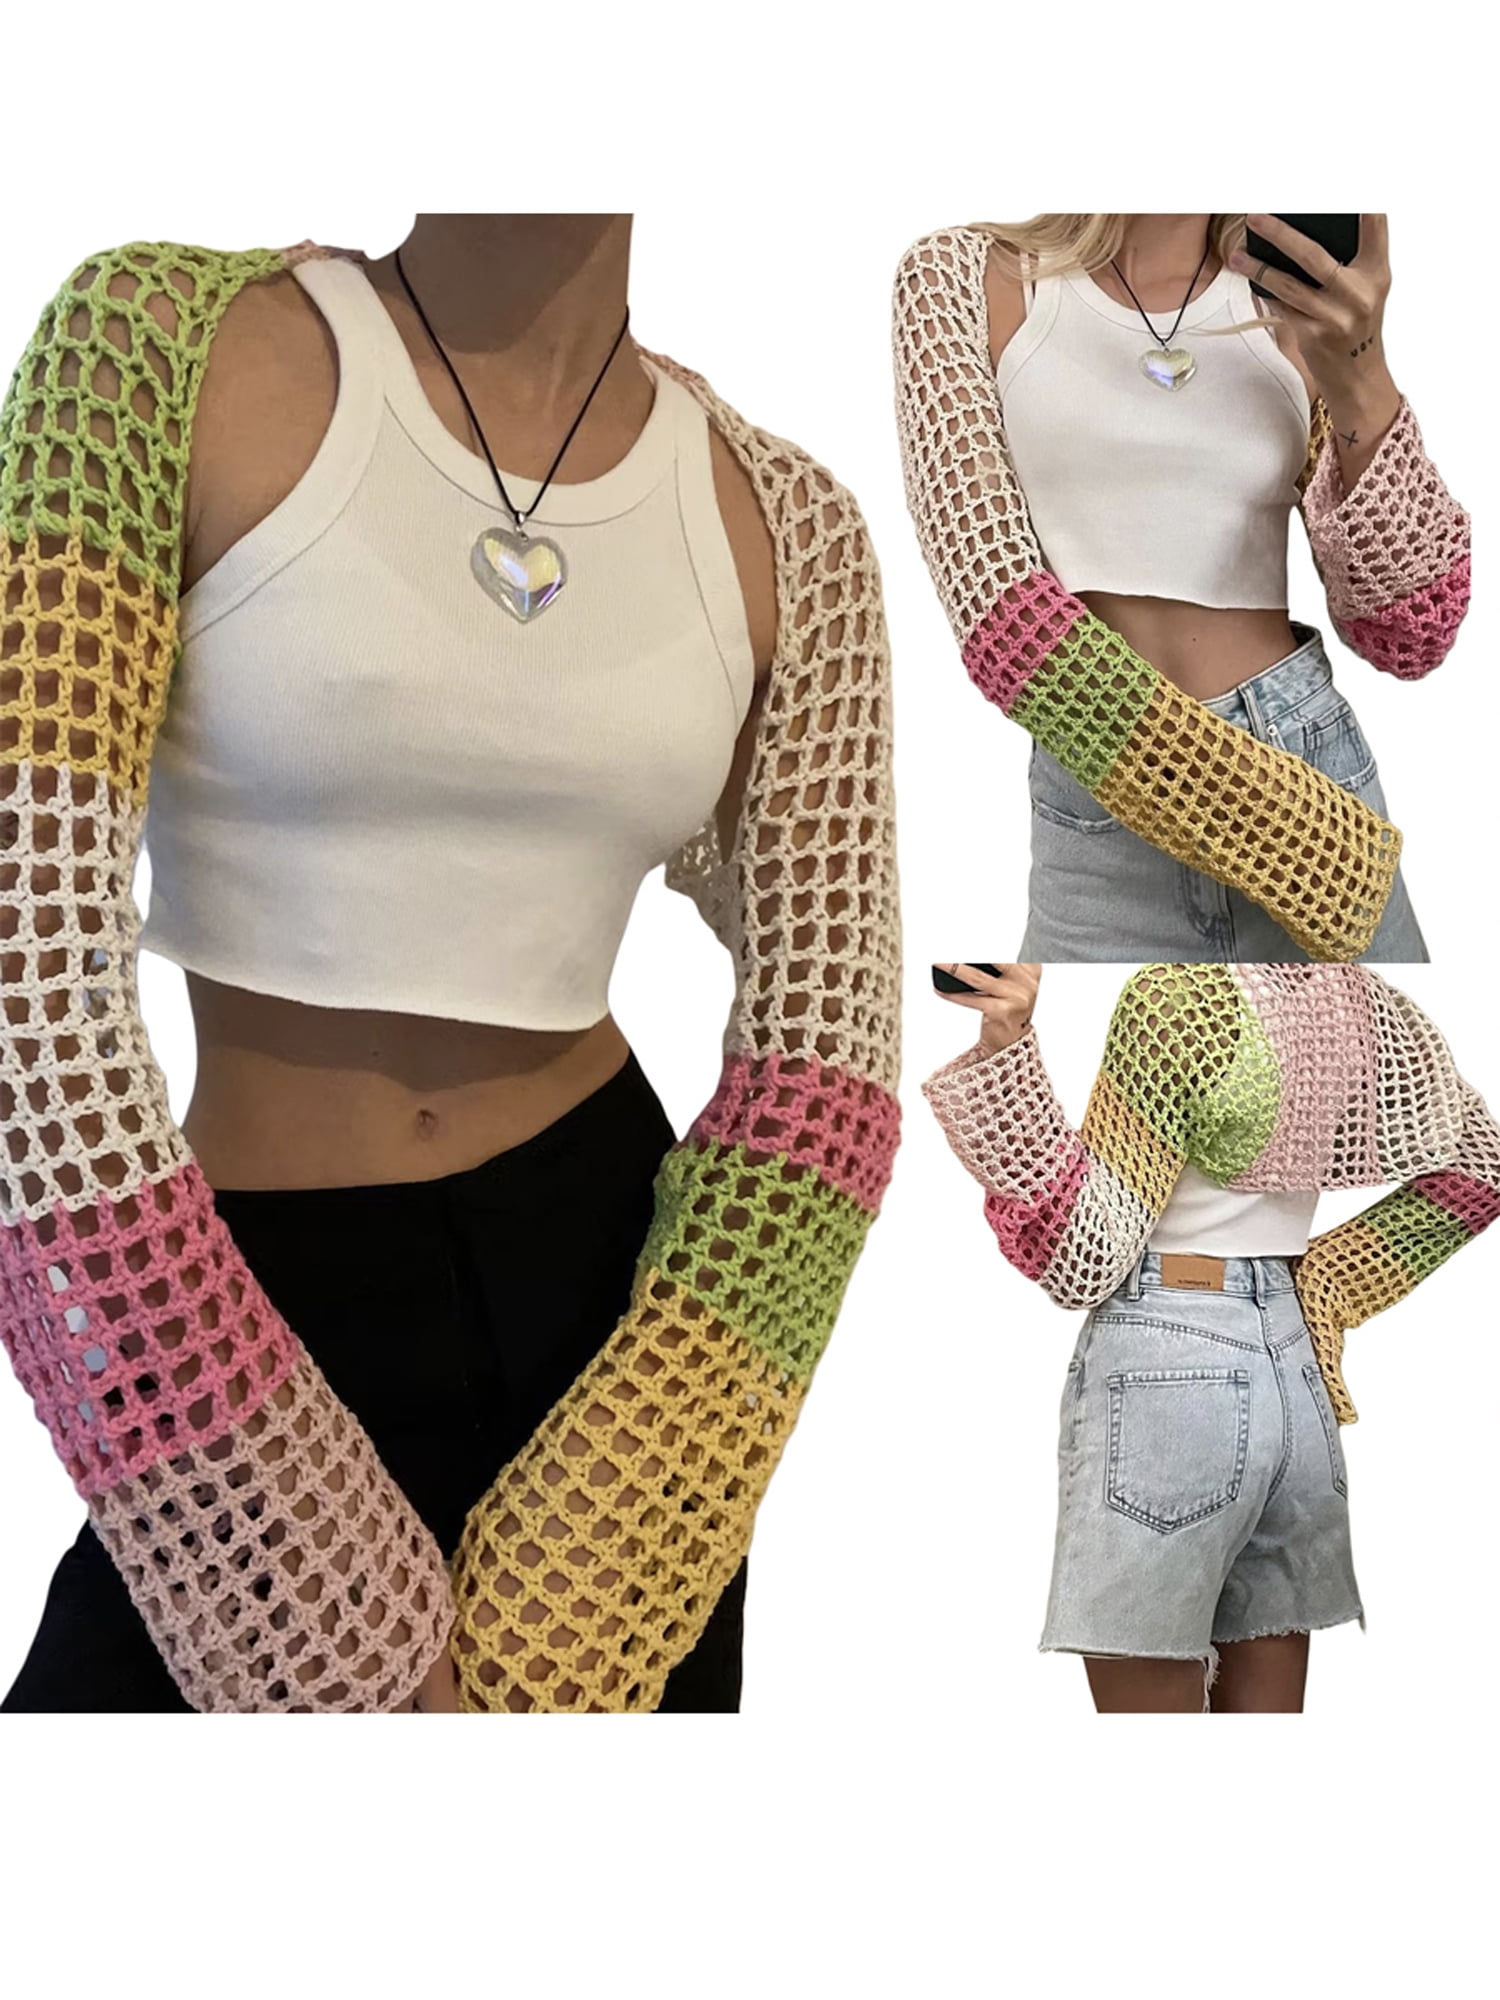 Tsseiatte Women Mesh Shrug, Long Sleeve Crochet Contrast Color